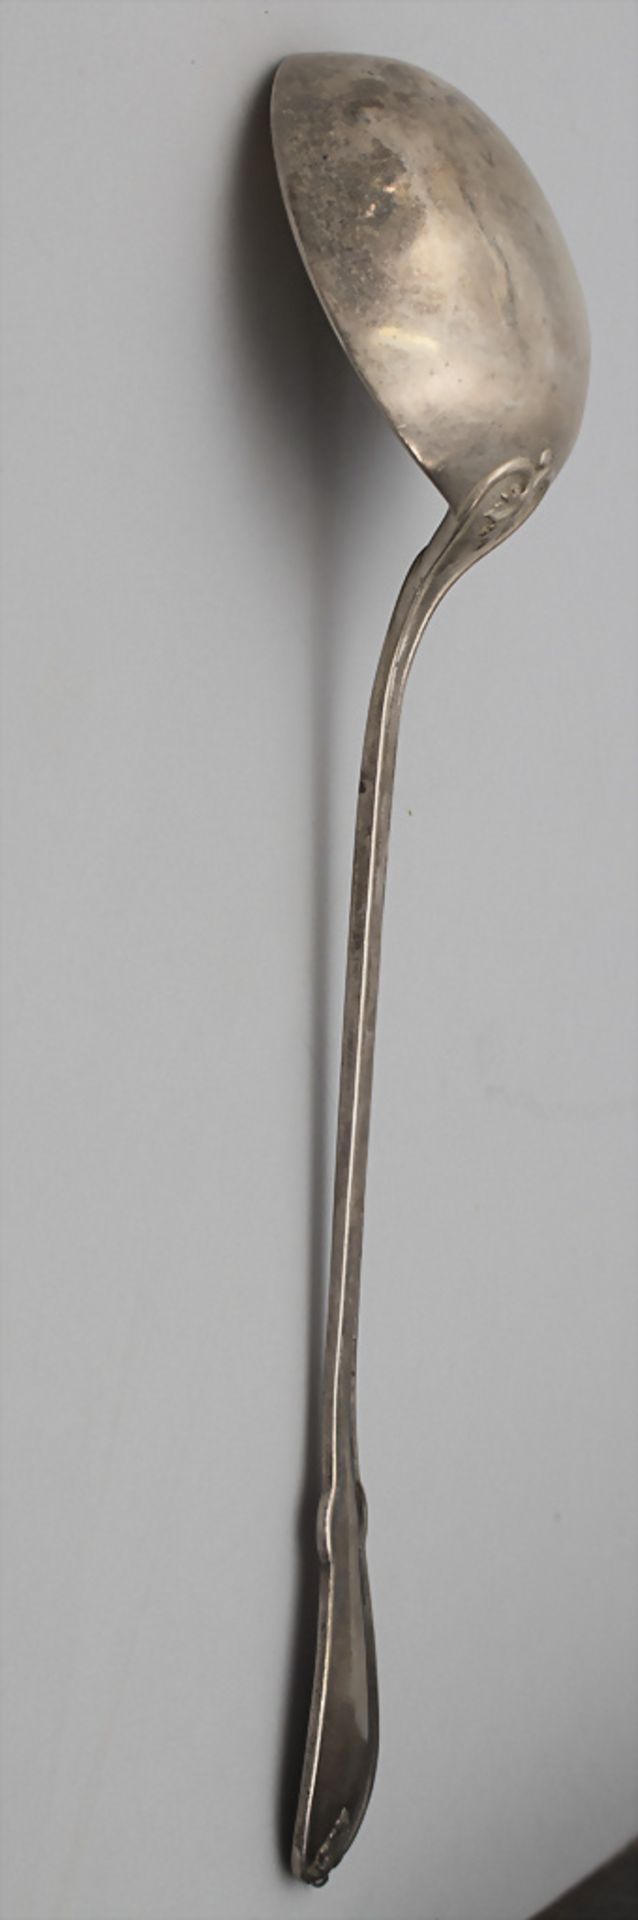 Silberbesteck 61 tlg. / A set of 61 pieces silver cutlery, Hènin Frères, Paris, 1865-1872 - Image 4 of 12